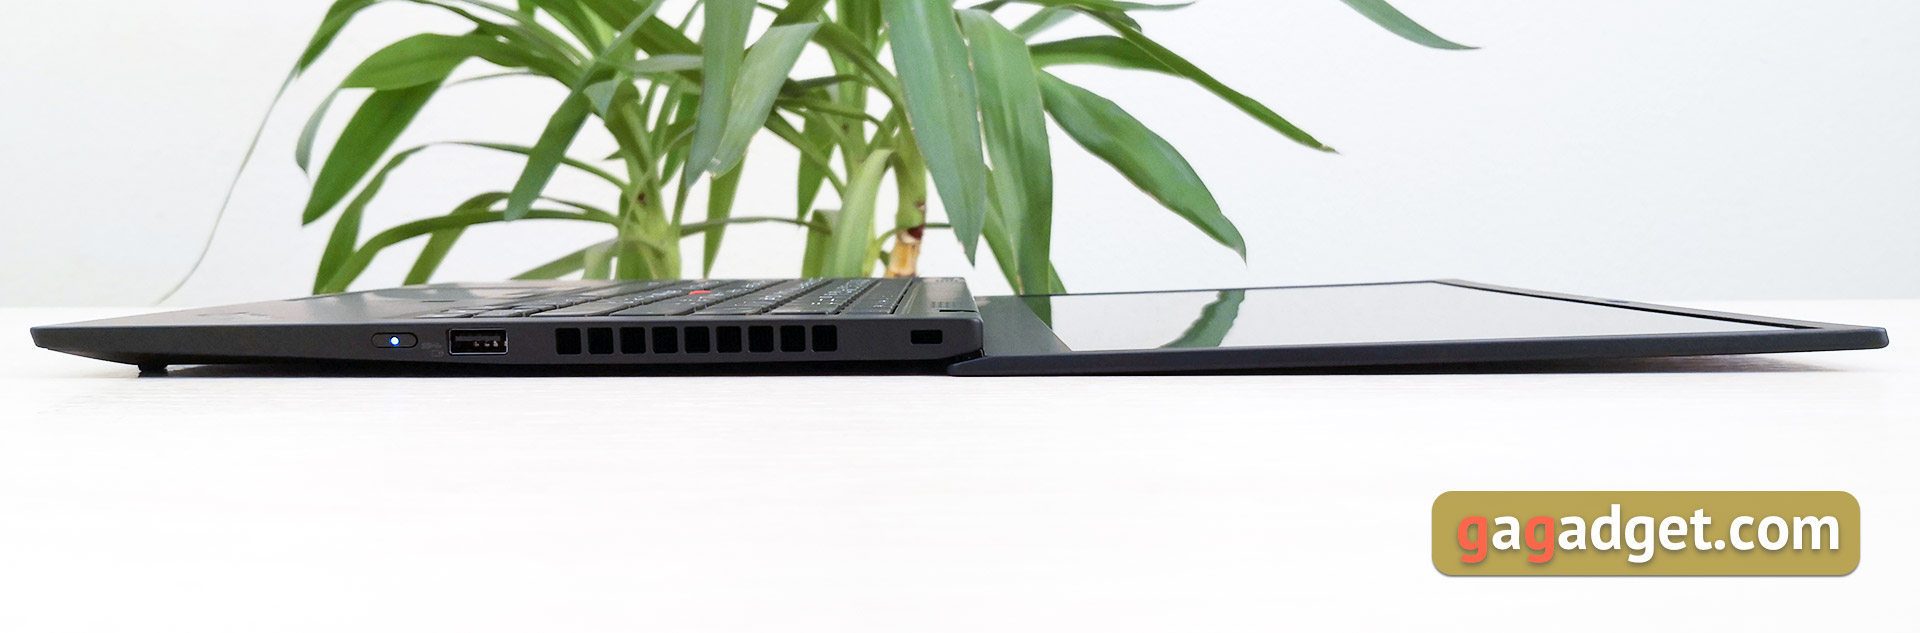 Recenzja Lenovo ThinkPad X1 Carbon 7. Gen: zaktualizowana biznes klasyka -30